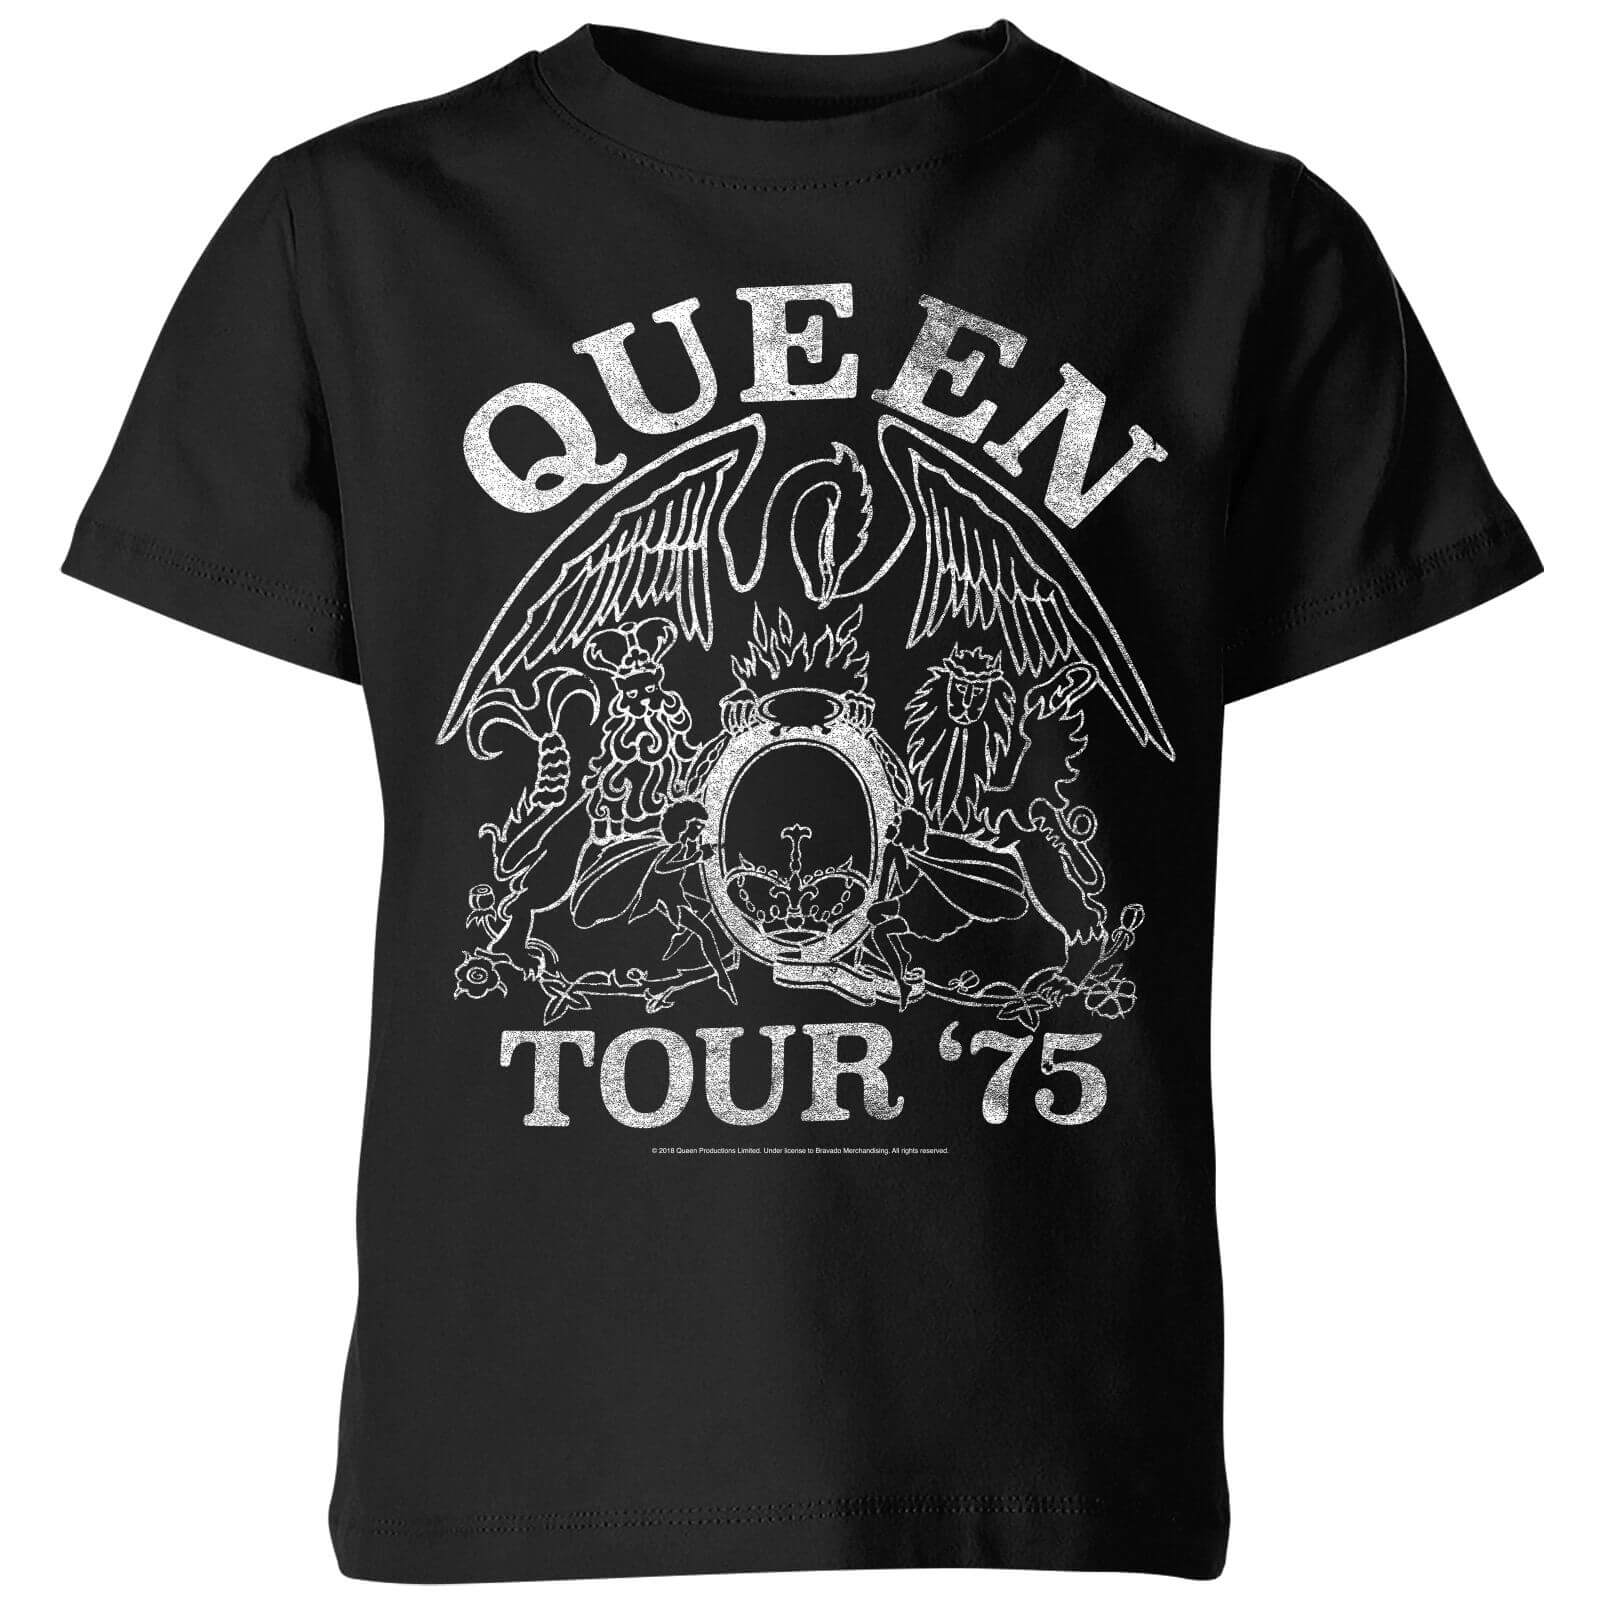 Queen Tour 75 Kids' T-Shirt - Black - 7-8 Years